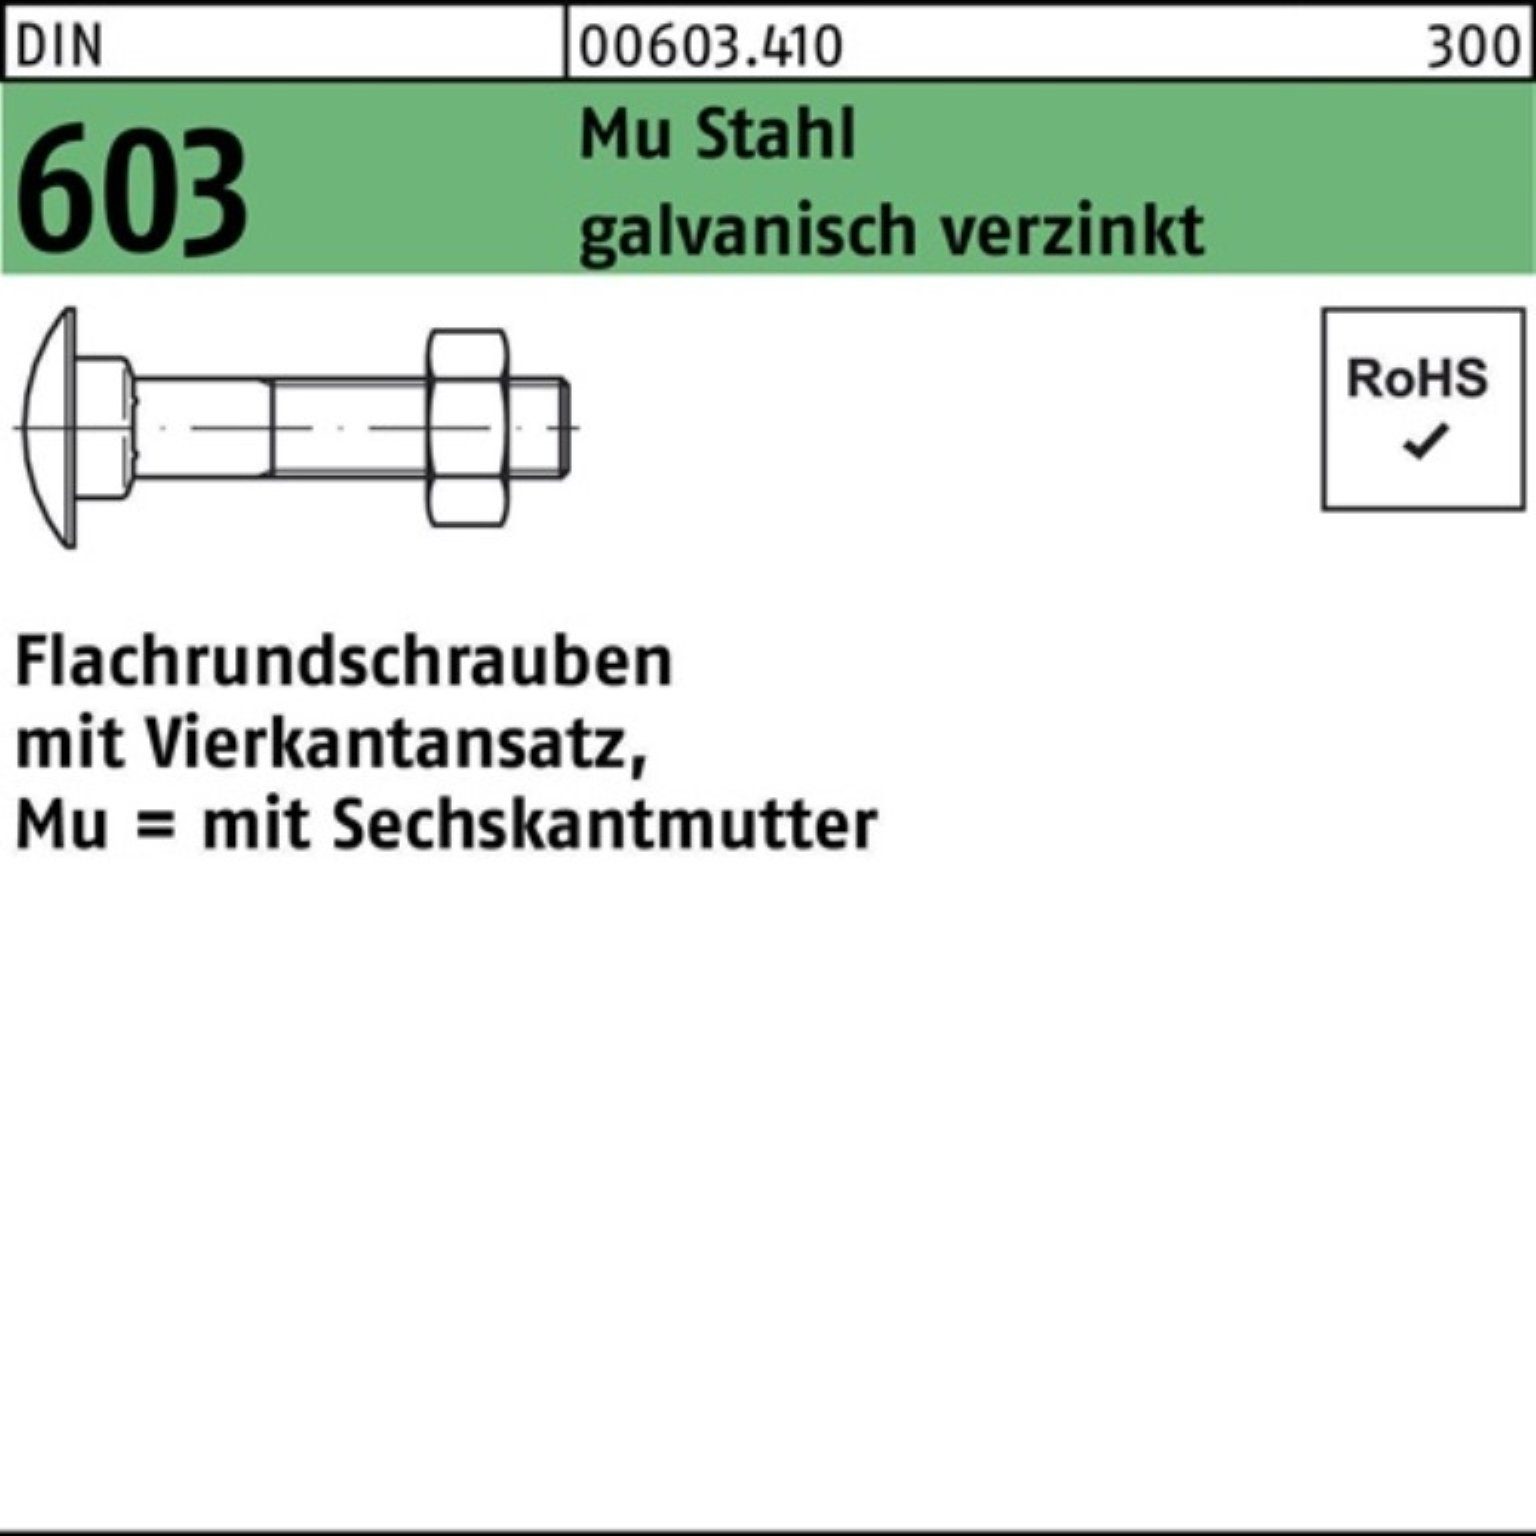 DIN Flachrundschraube 603 Vierkantansatz/6-ktmutter Pack M16x280 Reyher 100er Schraube